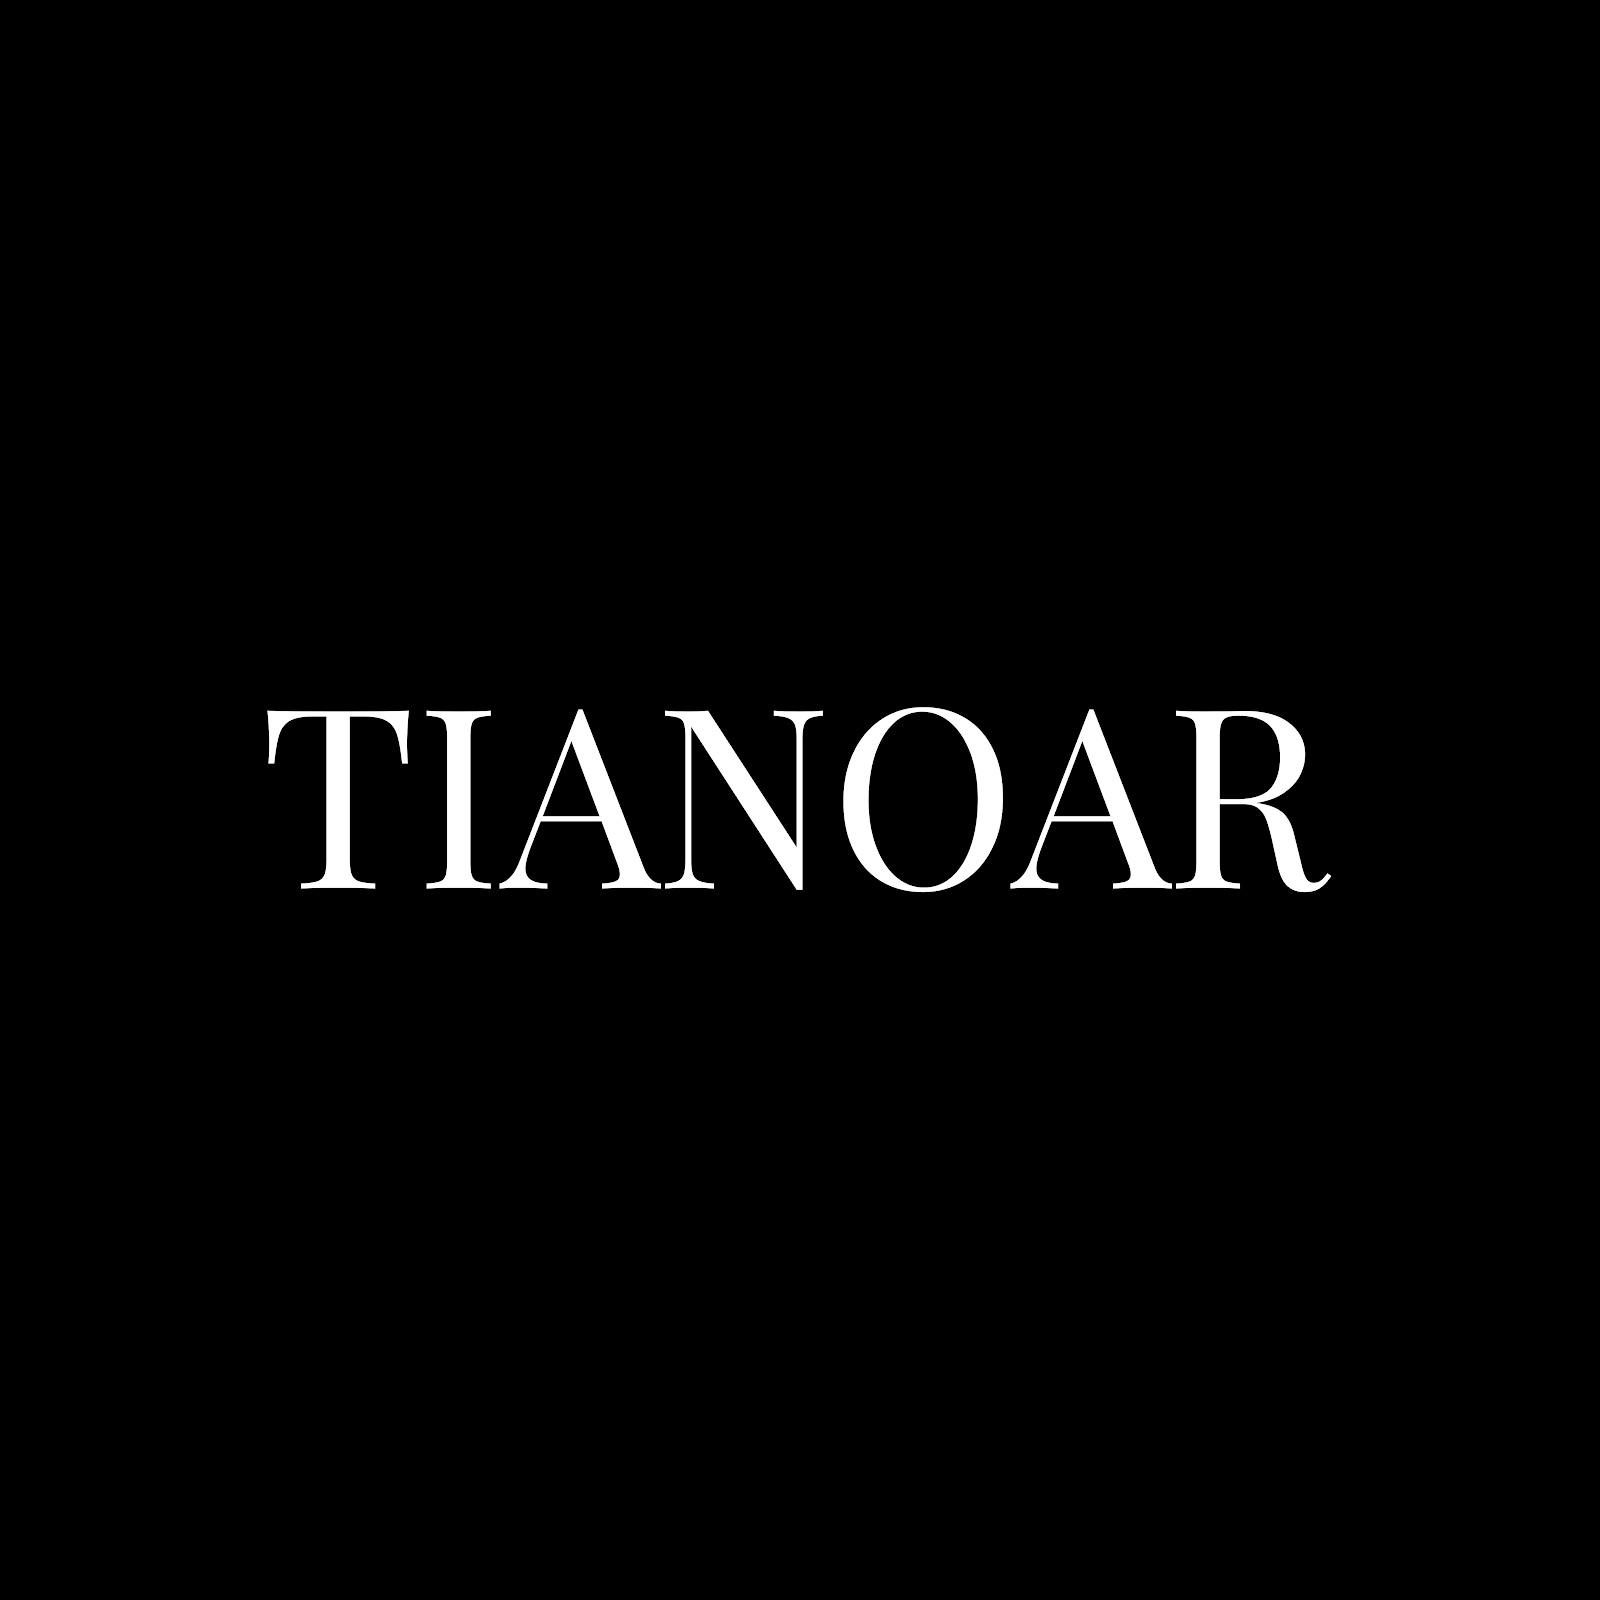 Tianoar